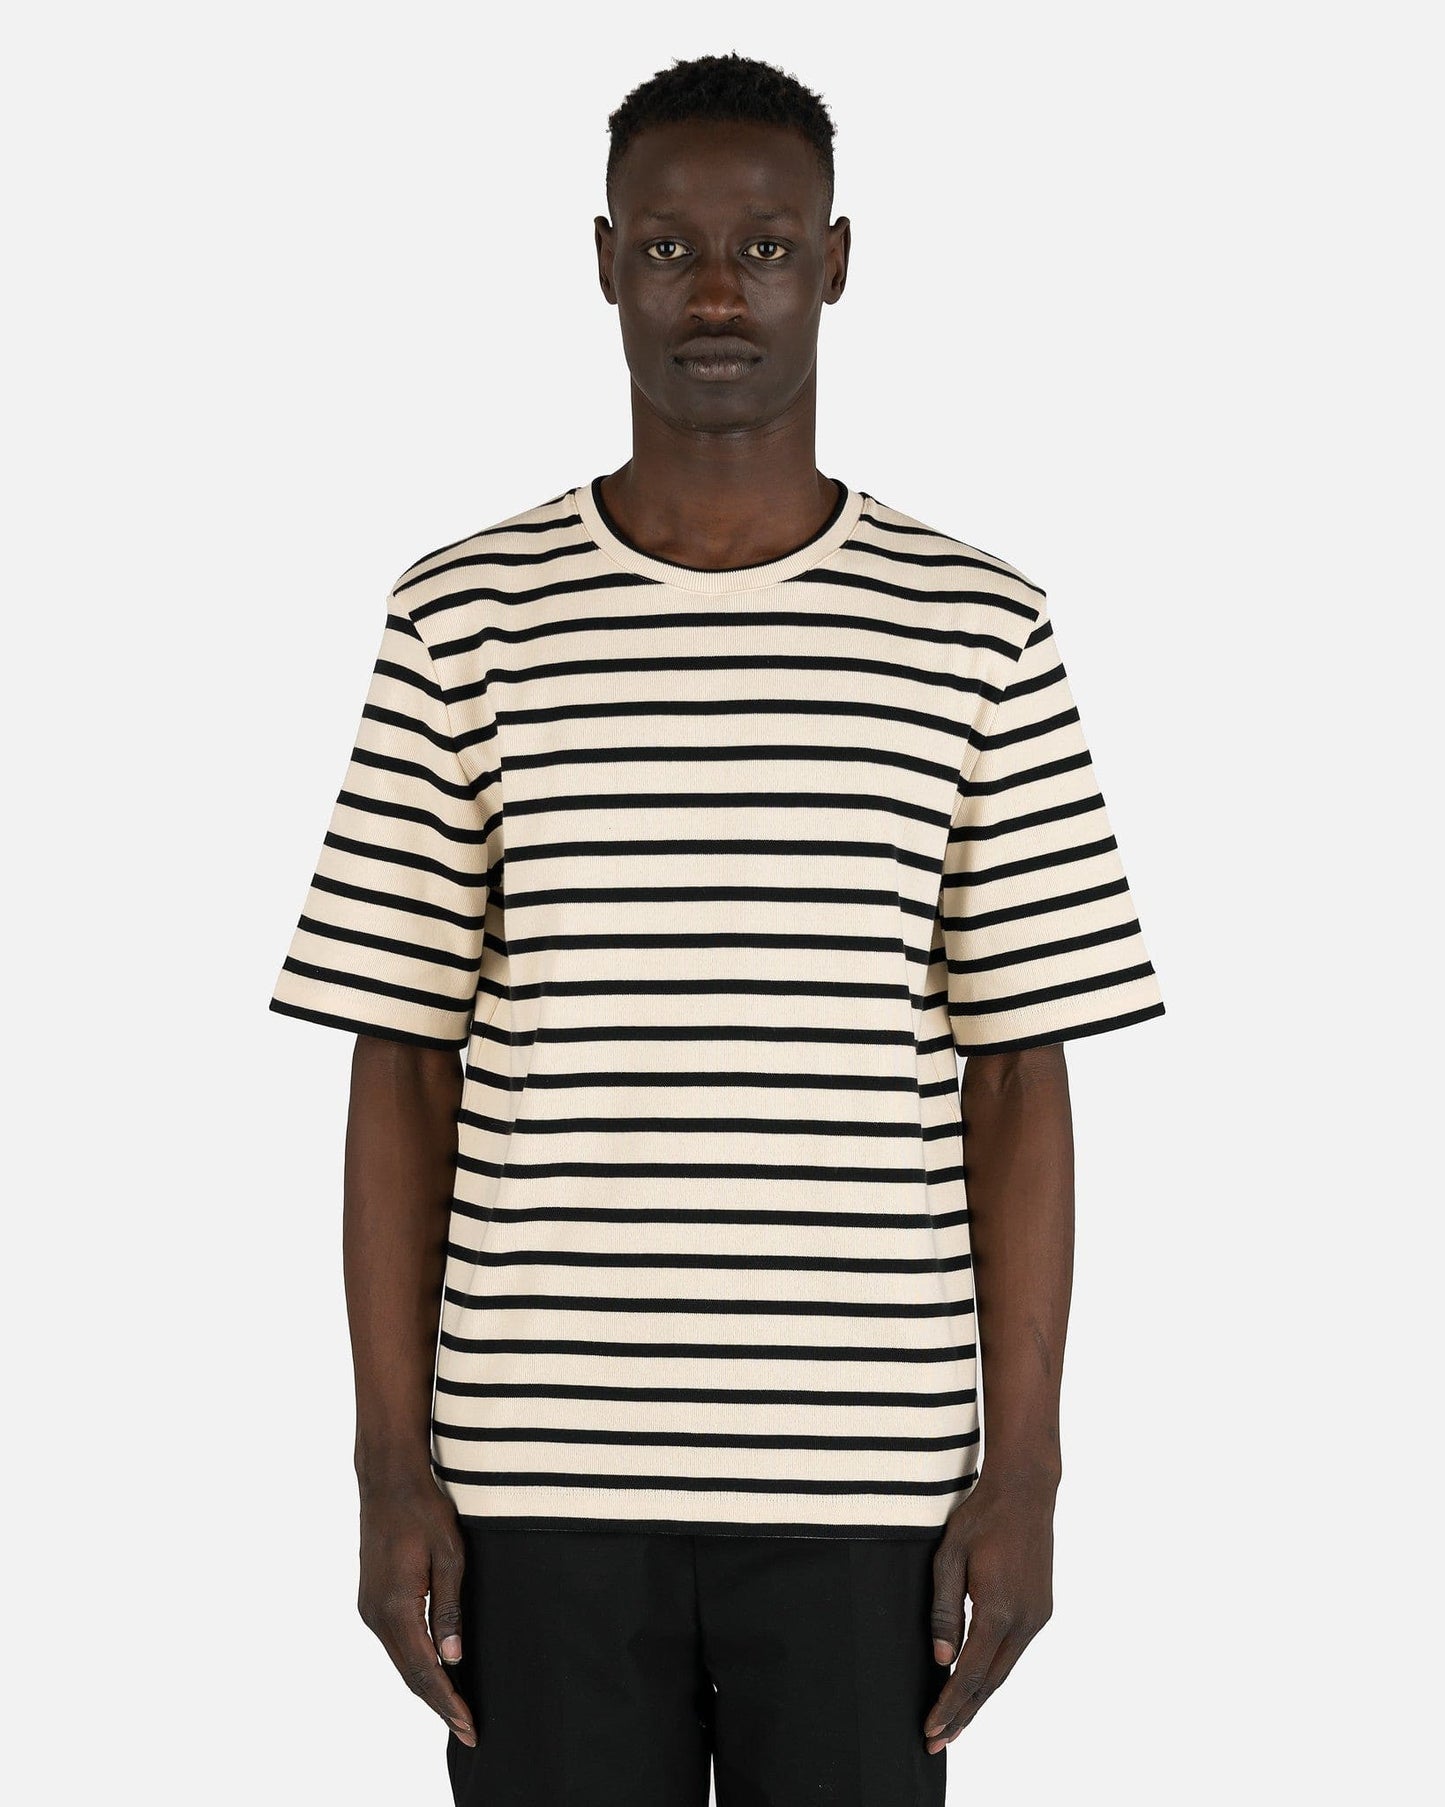 Jil Sander Men's T-Shirts Striped T-Shirt in Grey